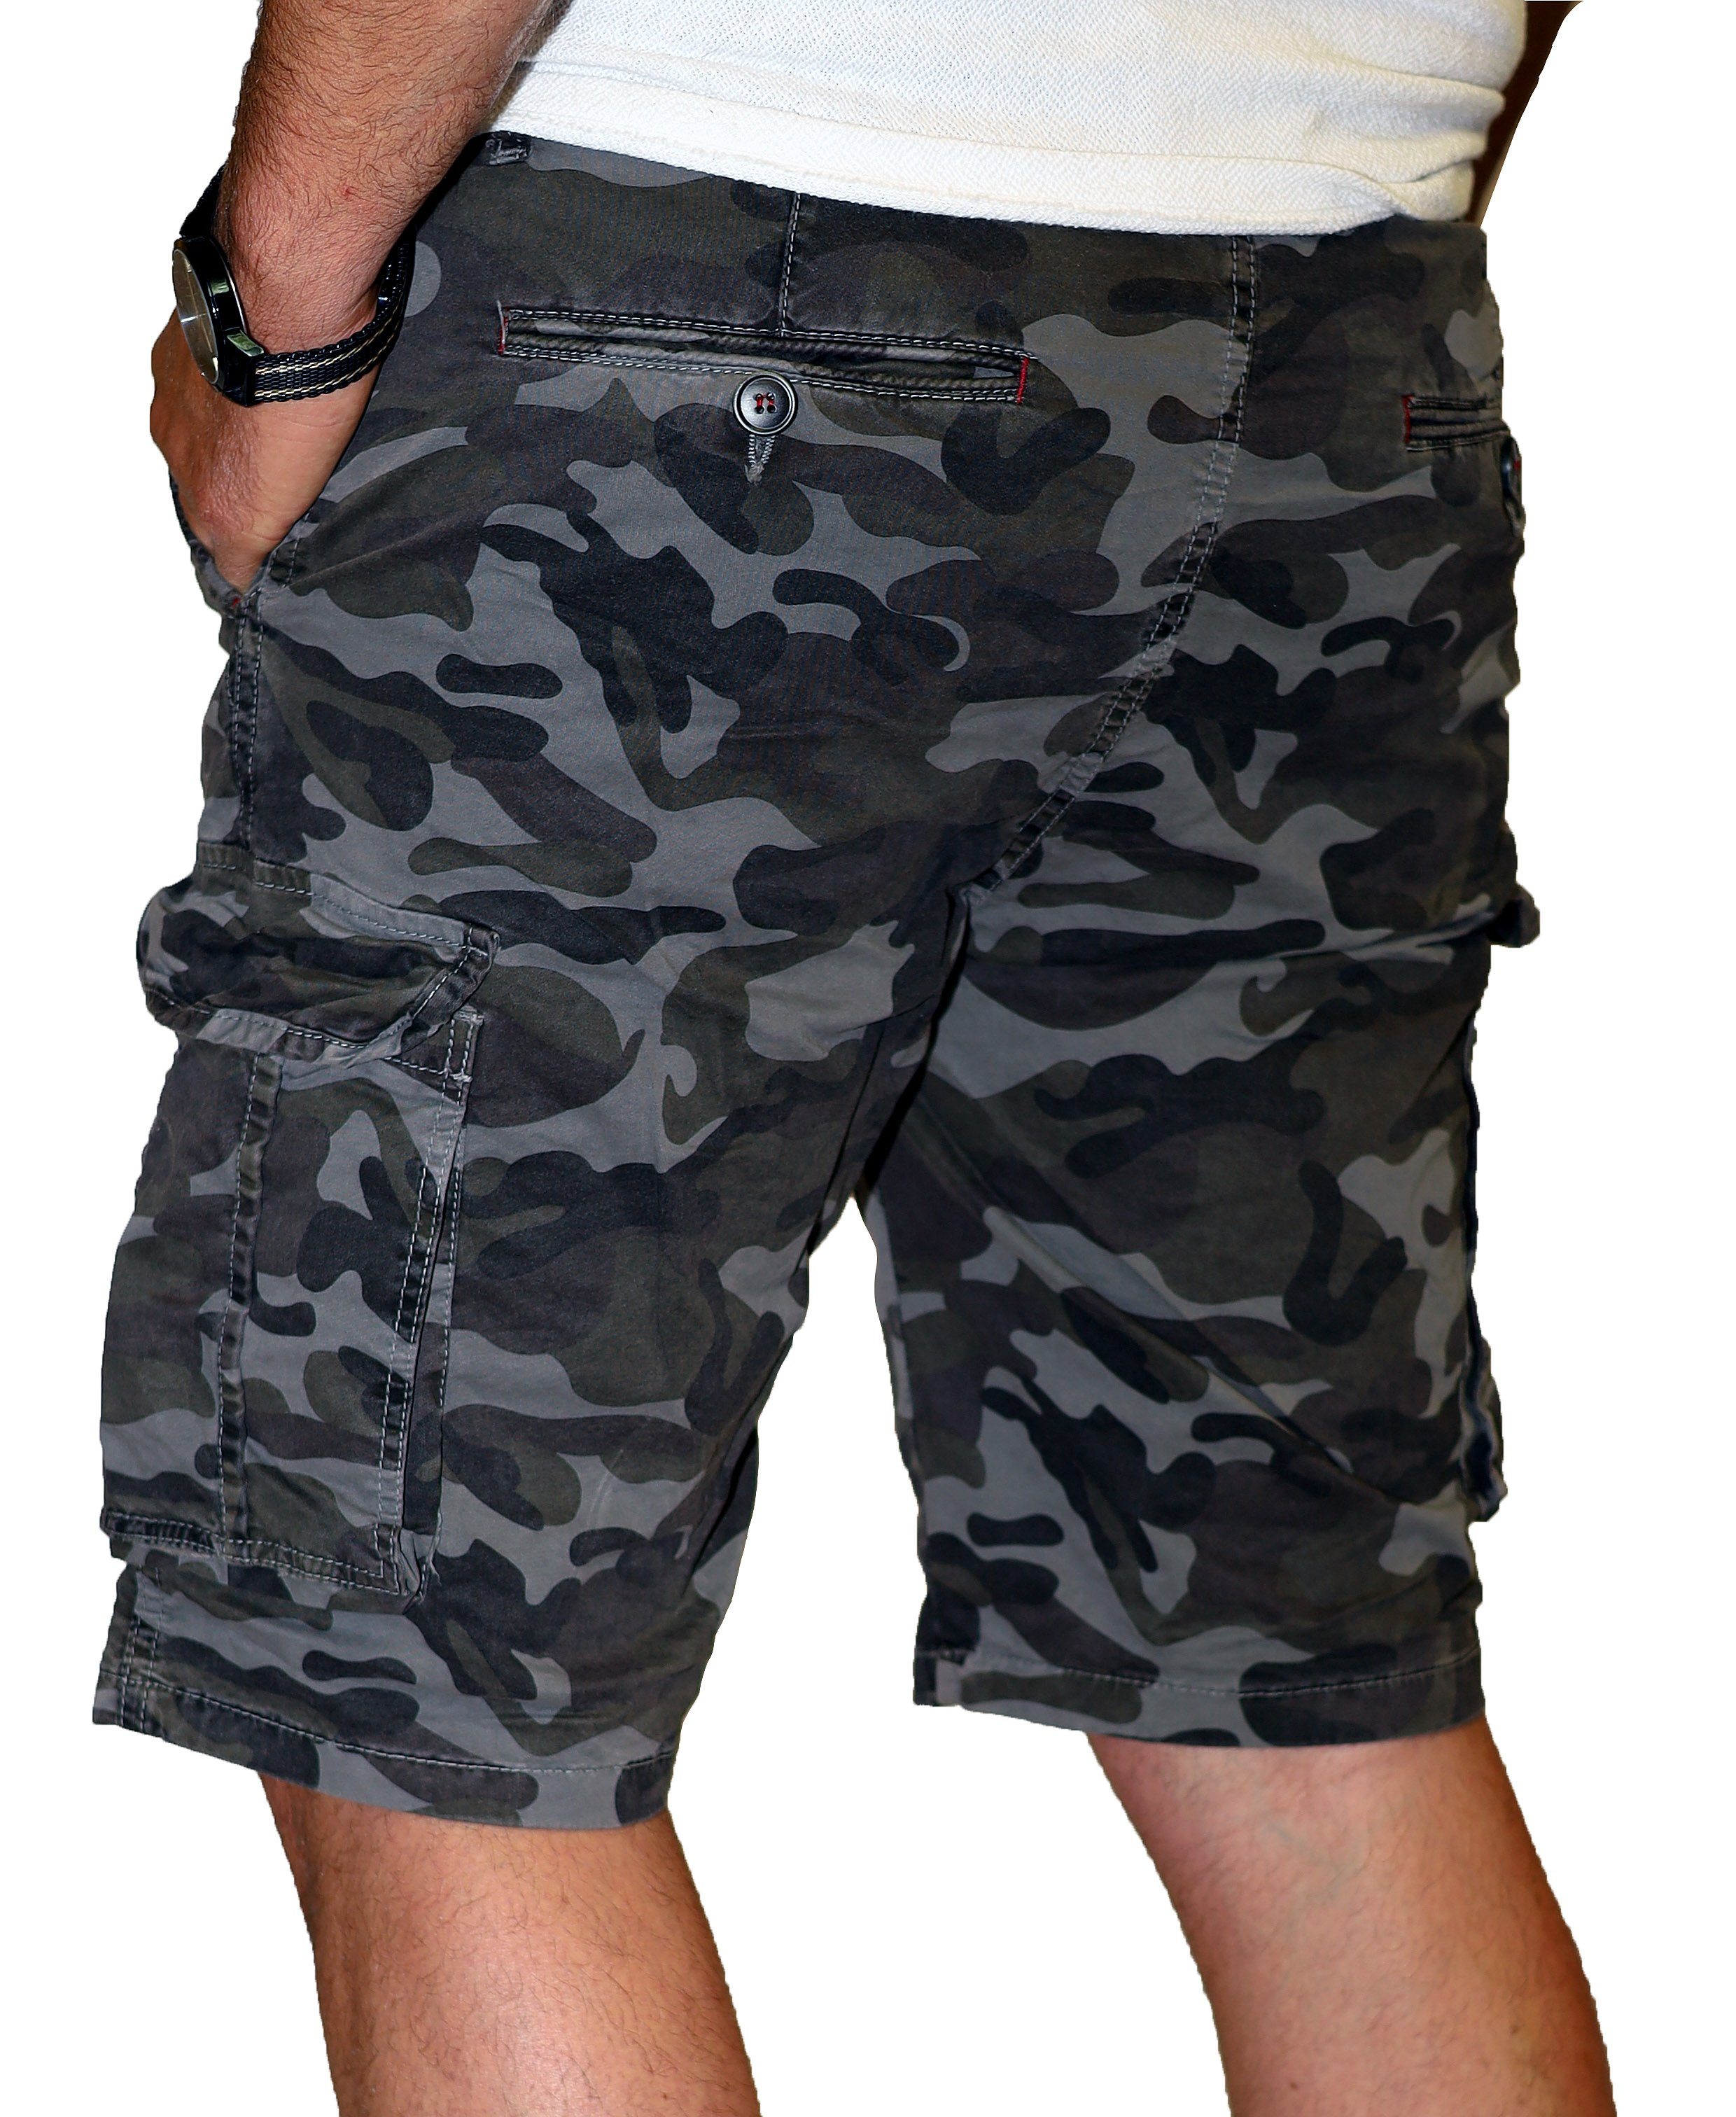 Baumwolle Herren Army Cargoshorts Hose Tarnfarben, Short aus RMK Set Camouflage 100% Tarn Grau Bermuda in kurze